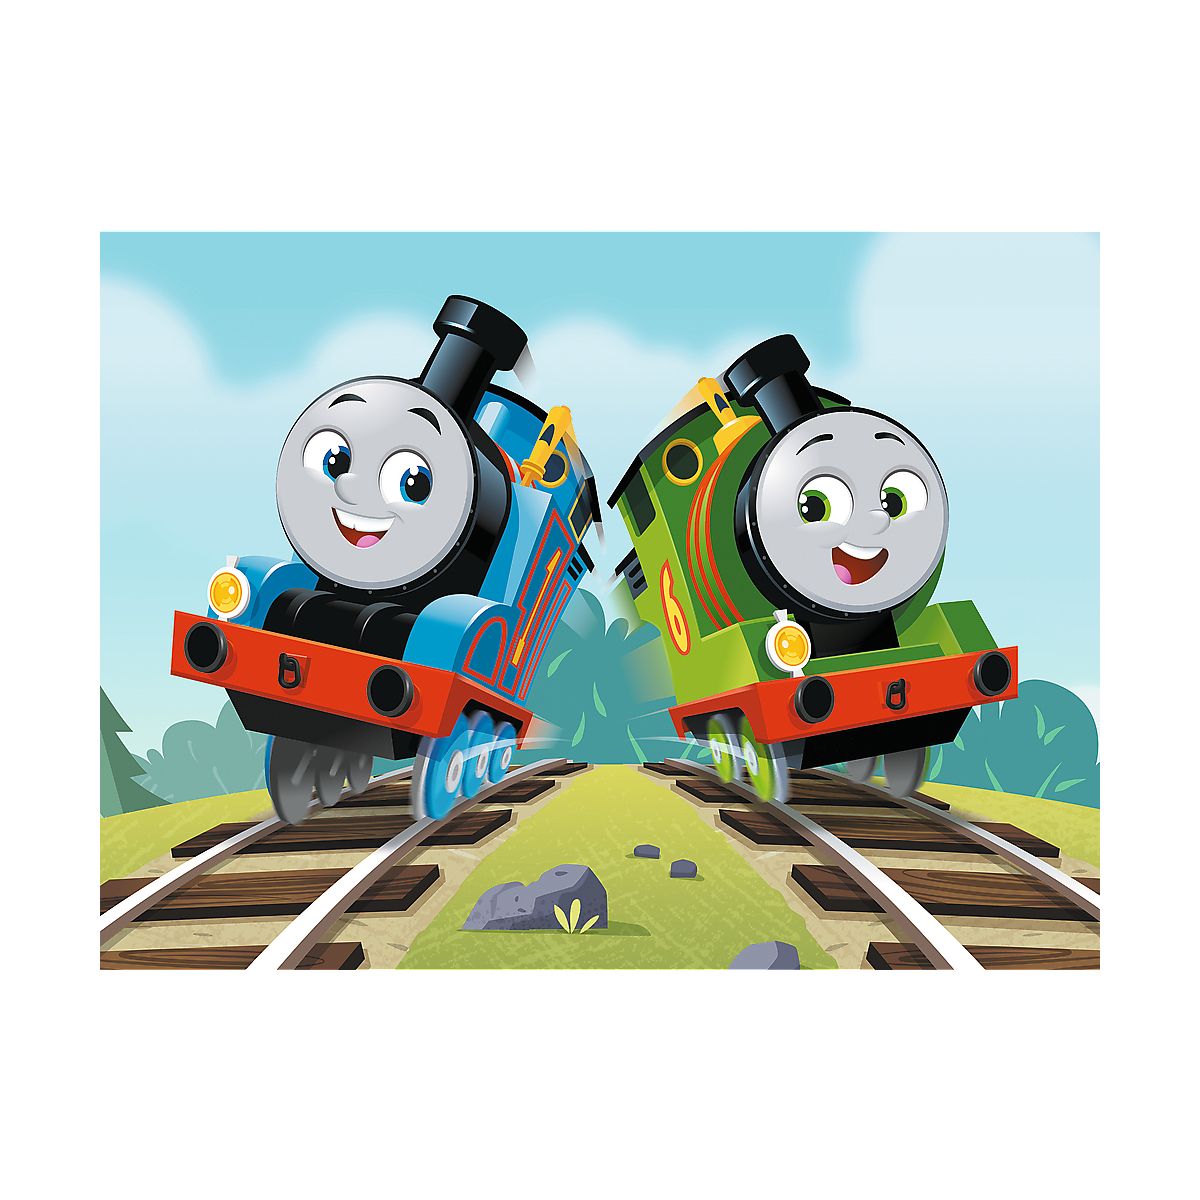 Puzzle Trefl Thomas And Friends (56039)